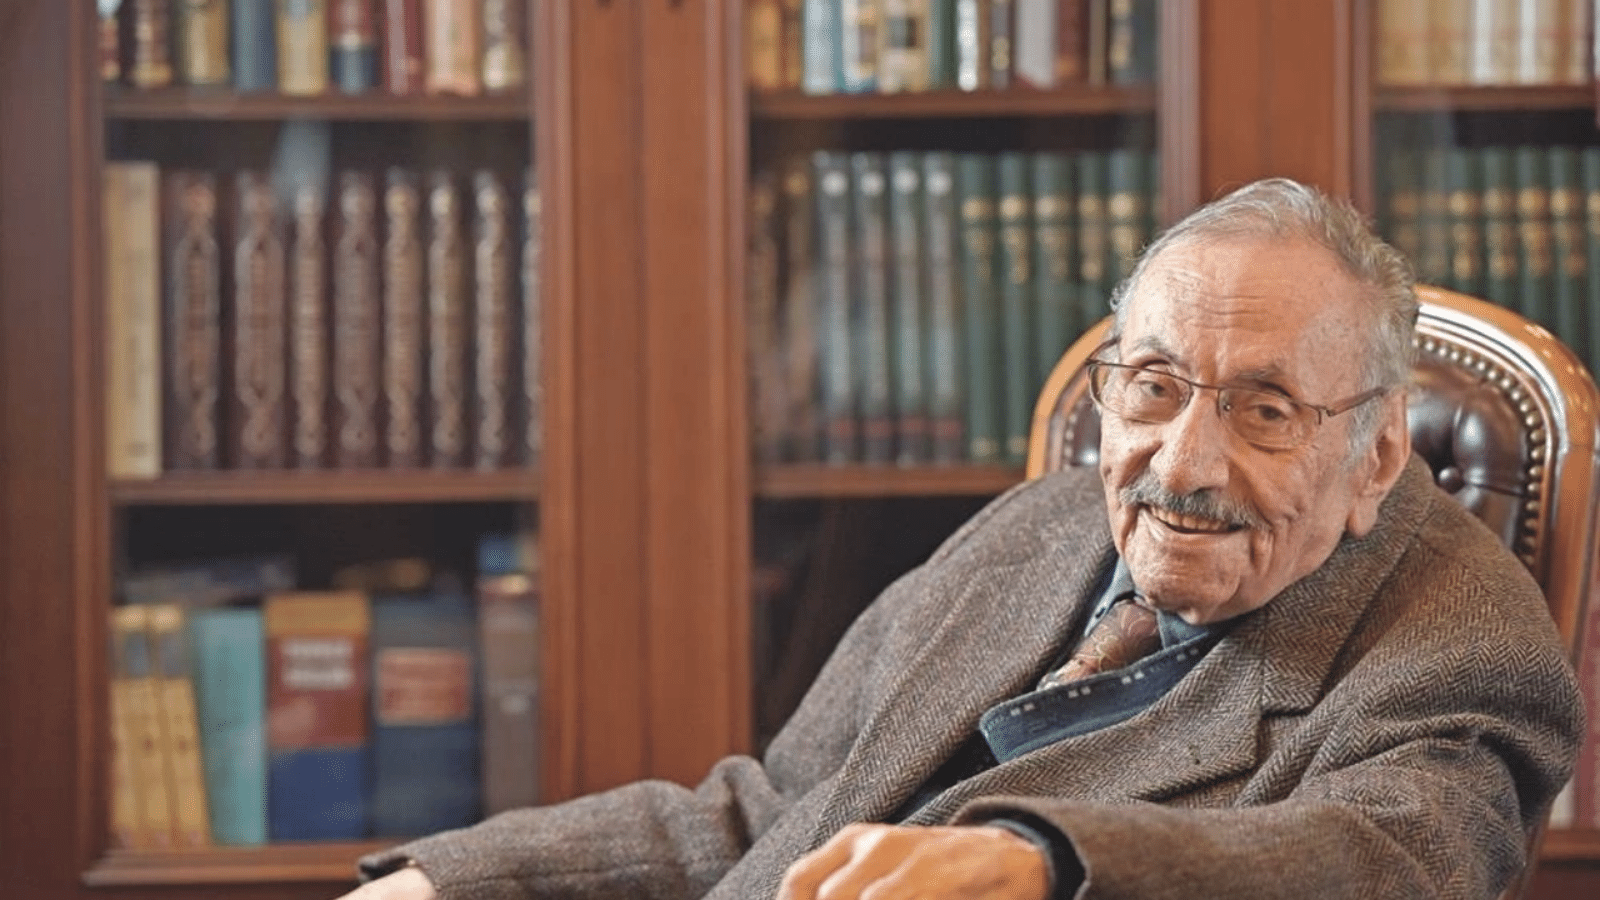 Yazar Üstün İnanç, 87 yaşında hayatını kaybetti